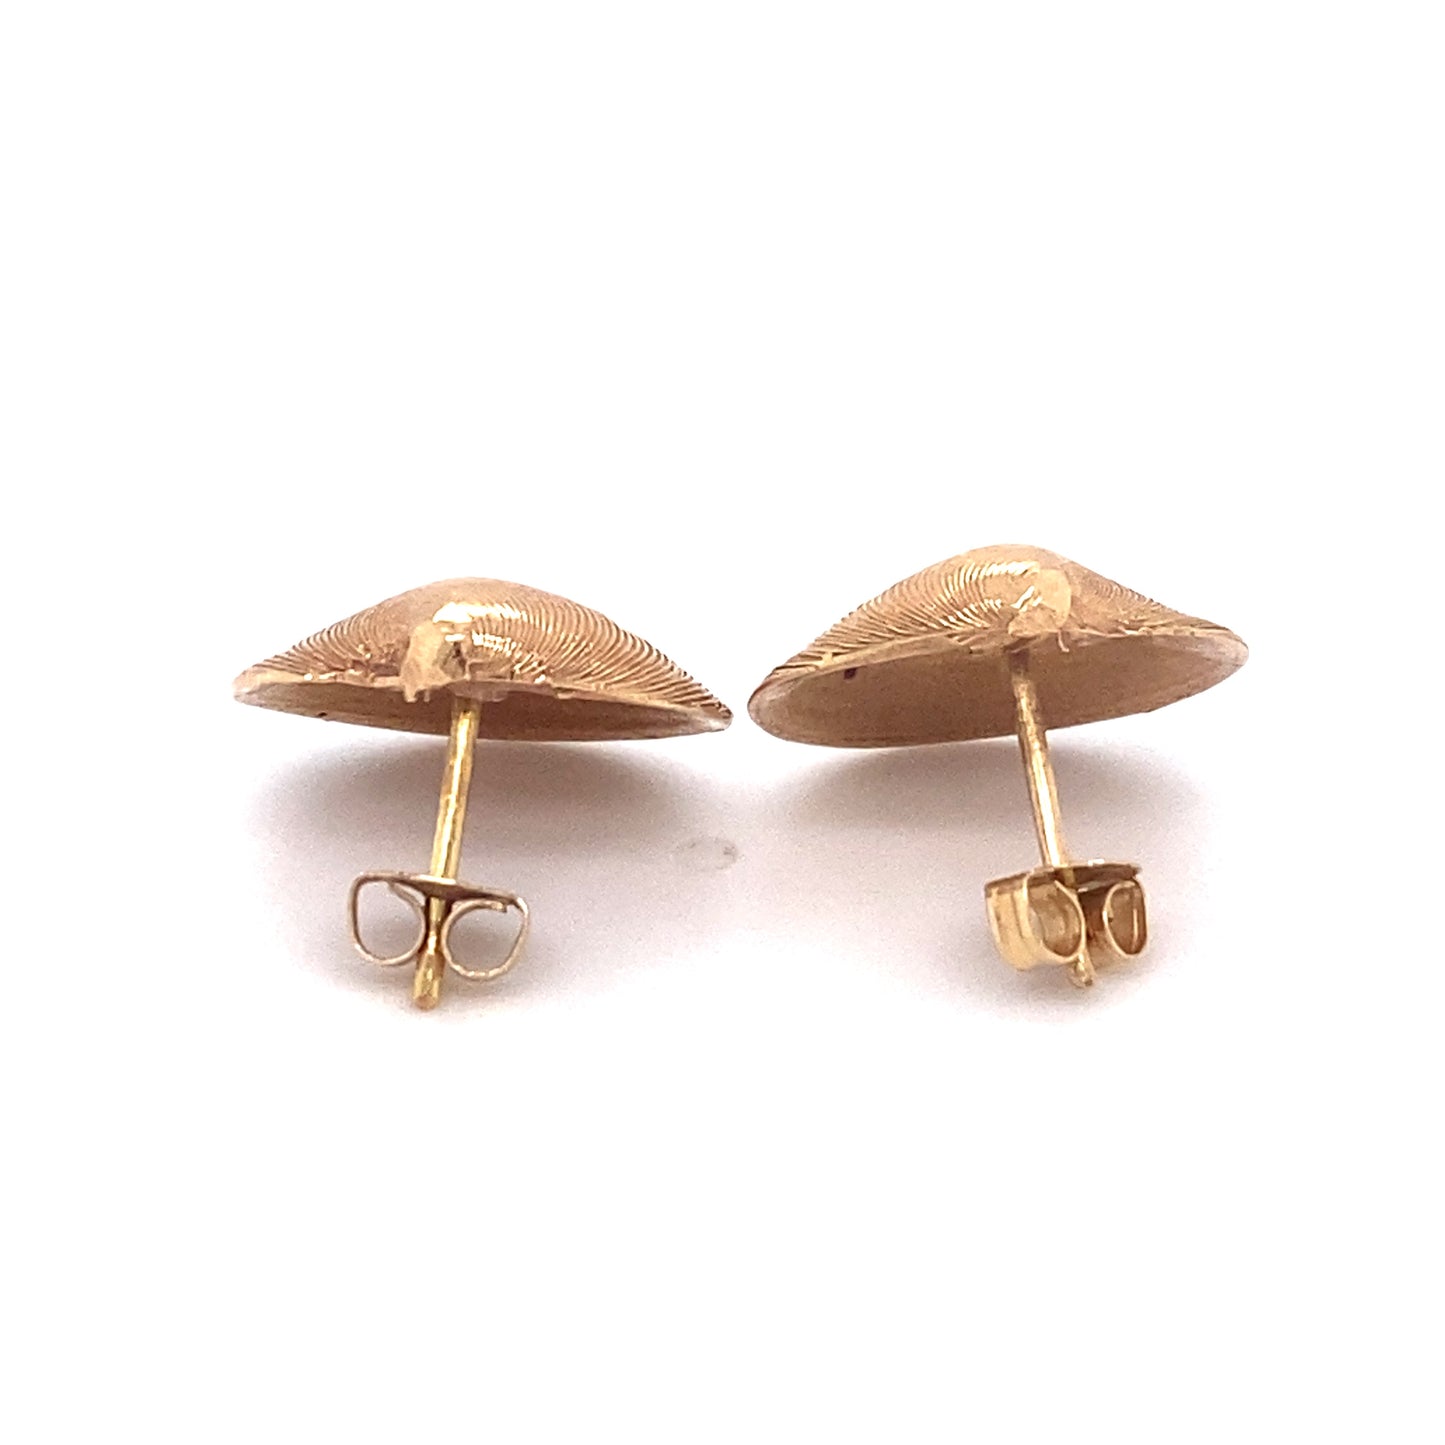 Circa 1950s Scallop Seashell Stud Earrings in 14K Gold